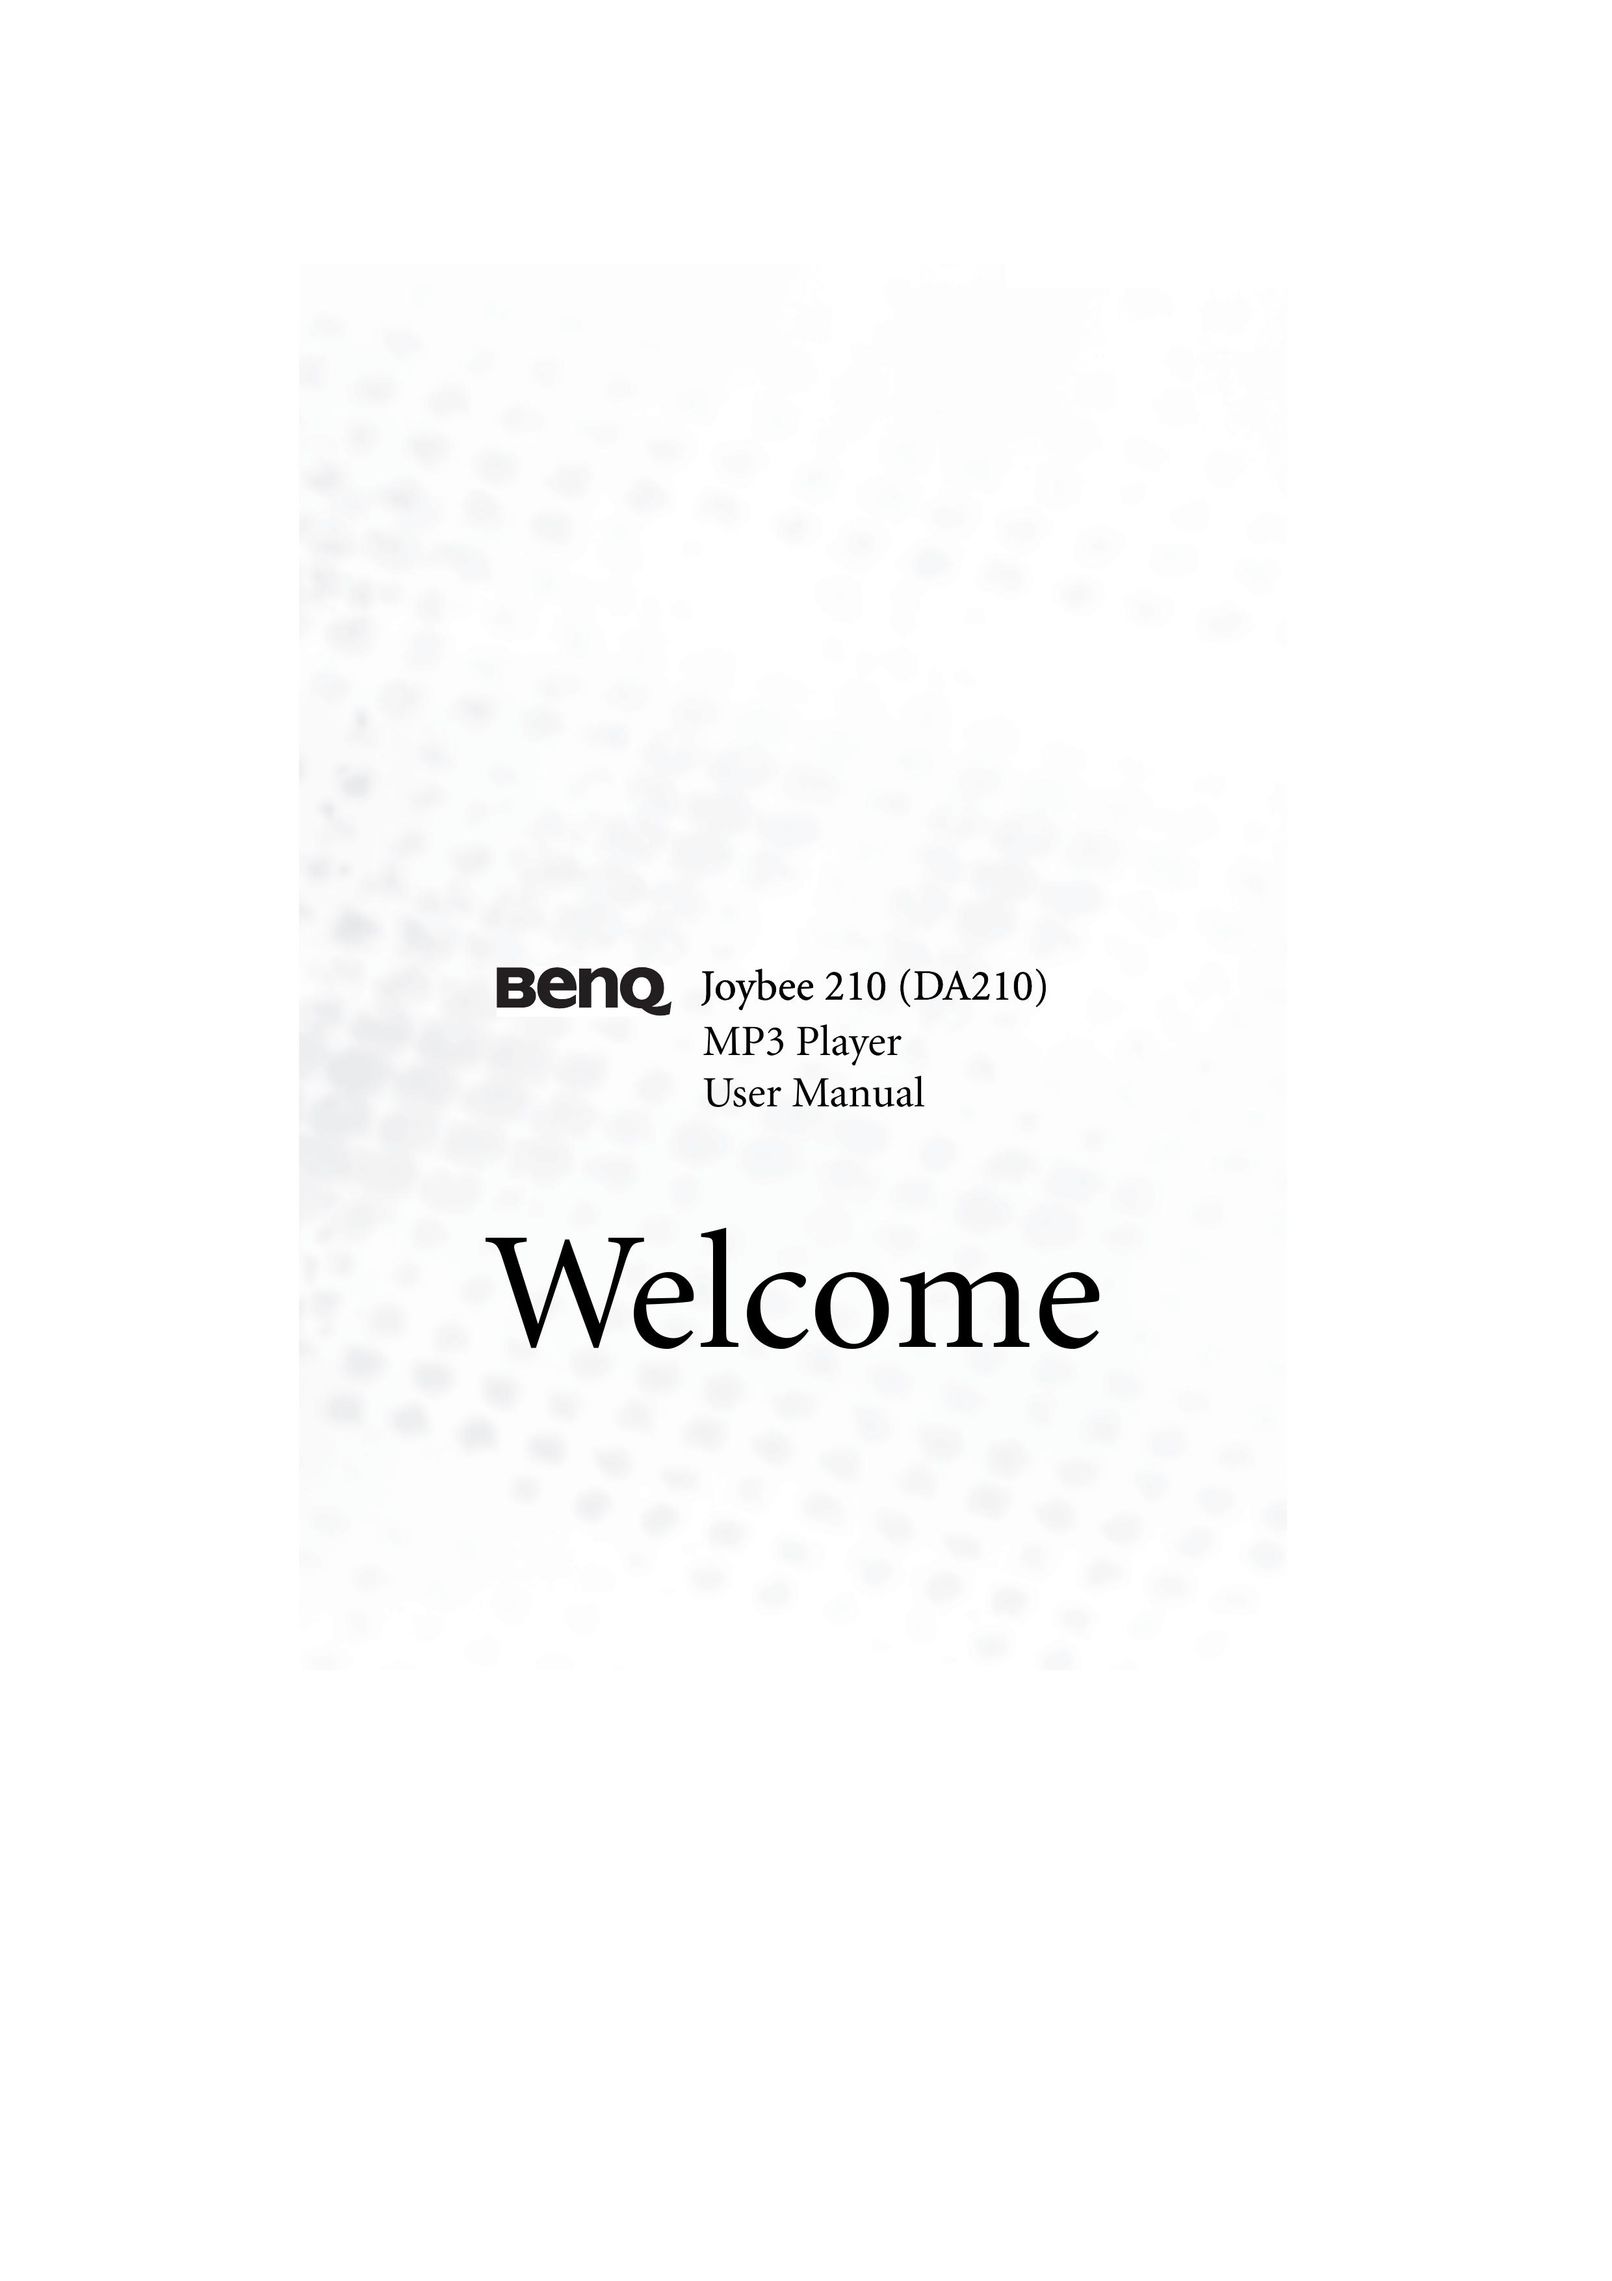 BenQ 210 MP3 Player User Manual